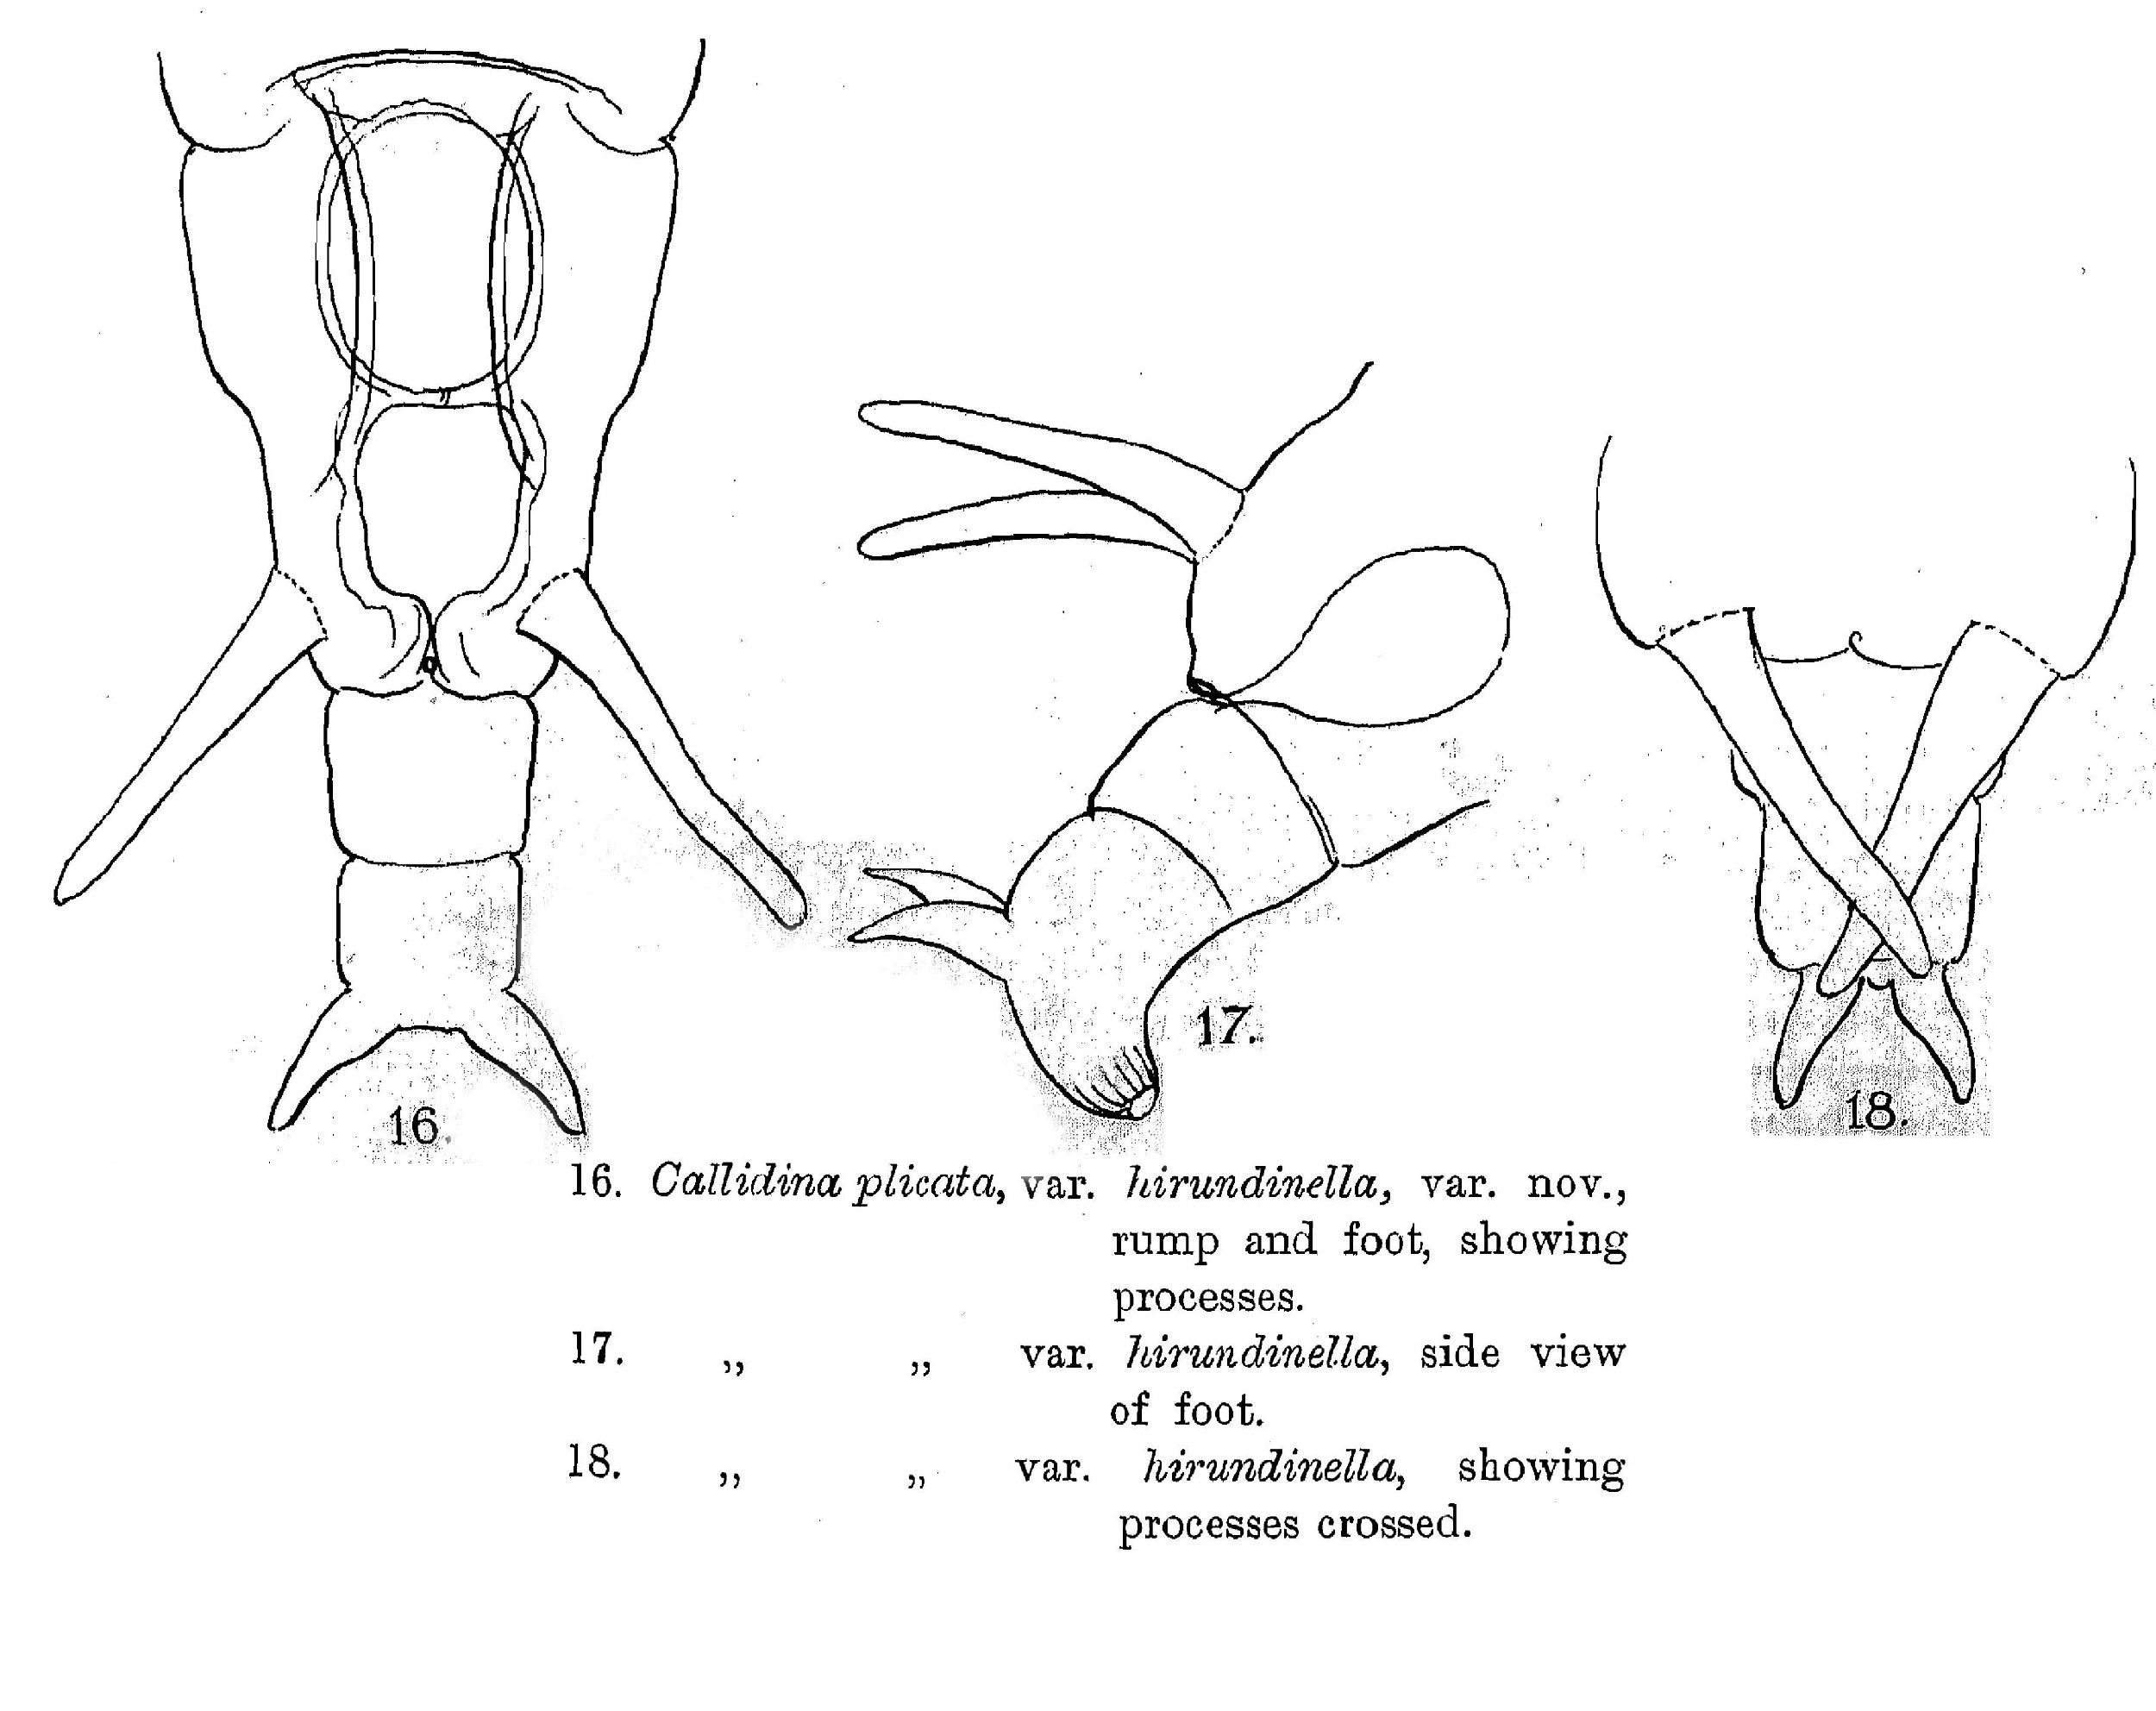 Image of Macrotrachela plicata hirundinella (Murray 1892)